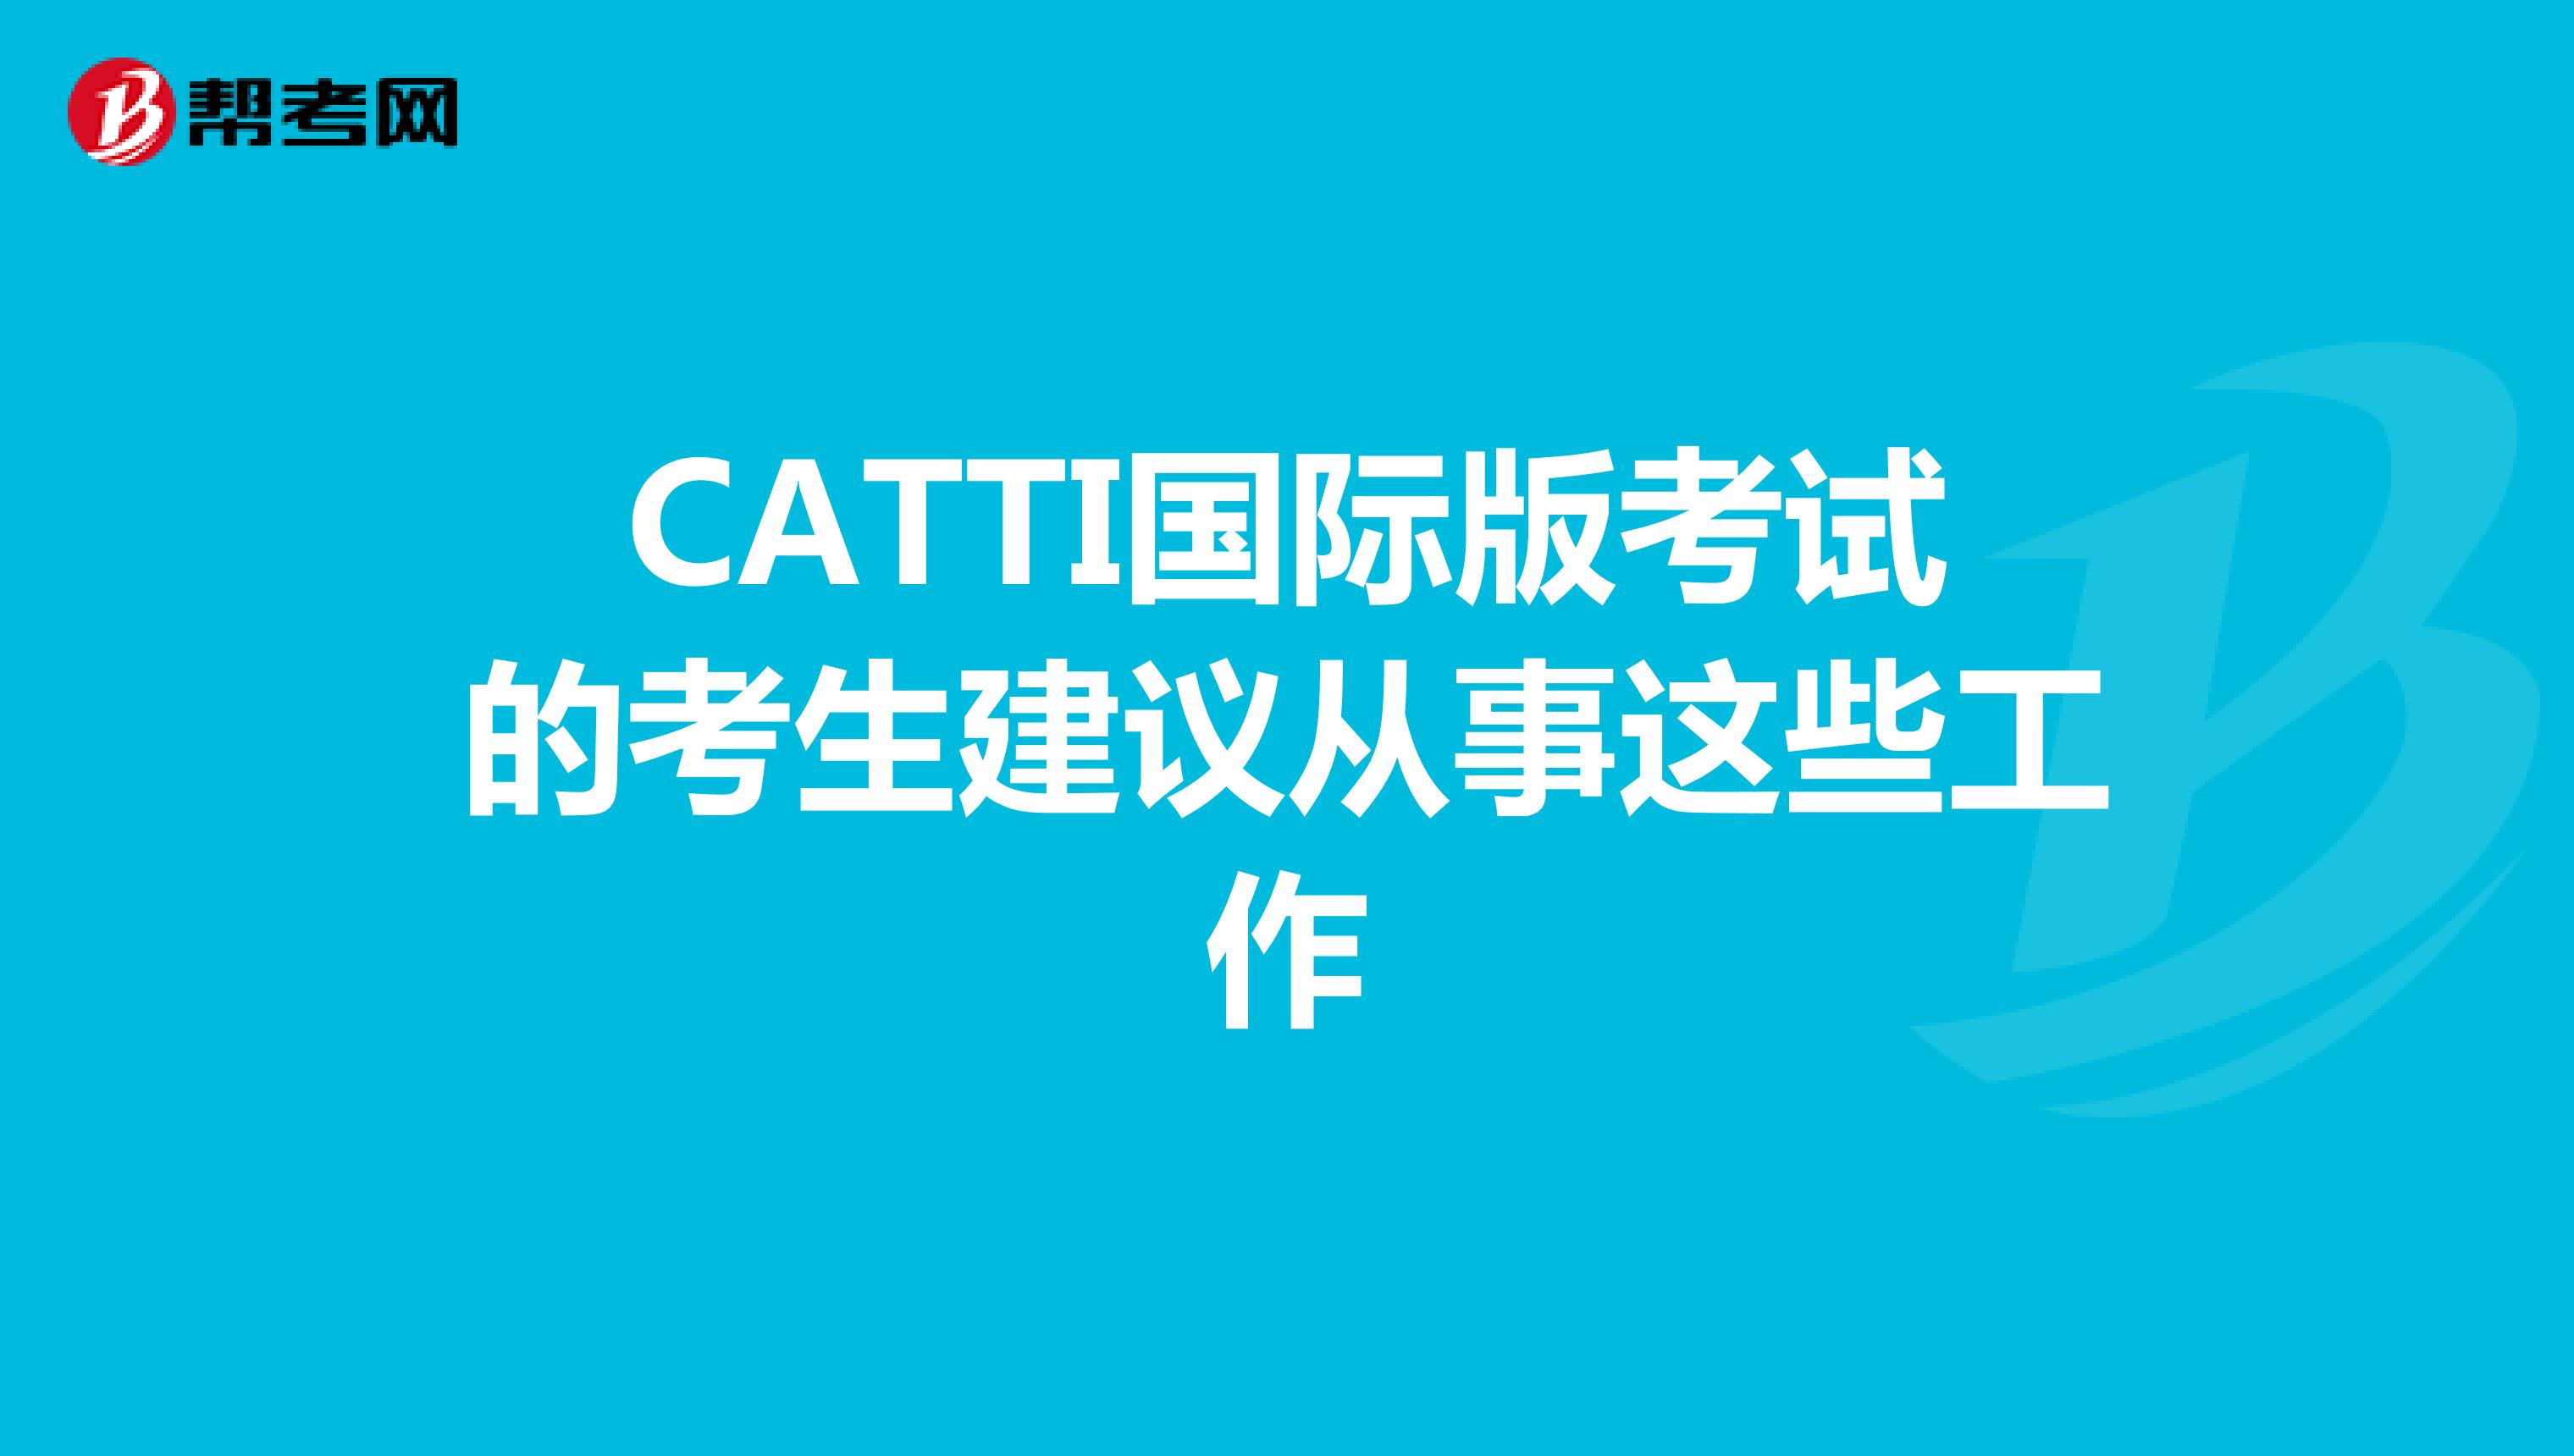 CATTI国际版考试的考生建议从事这些工作